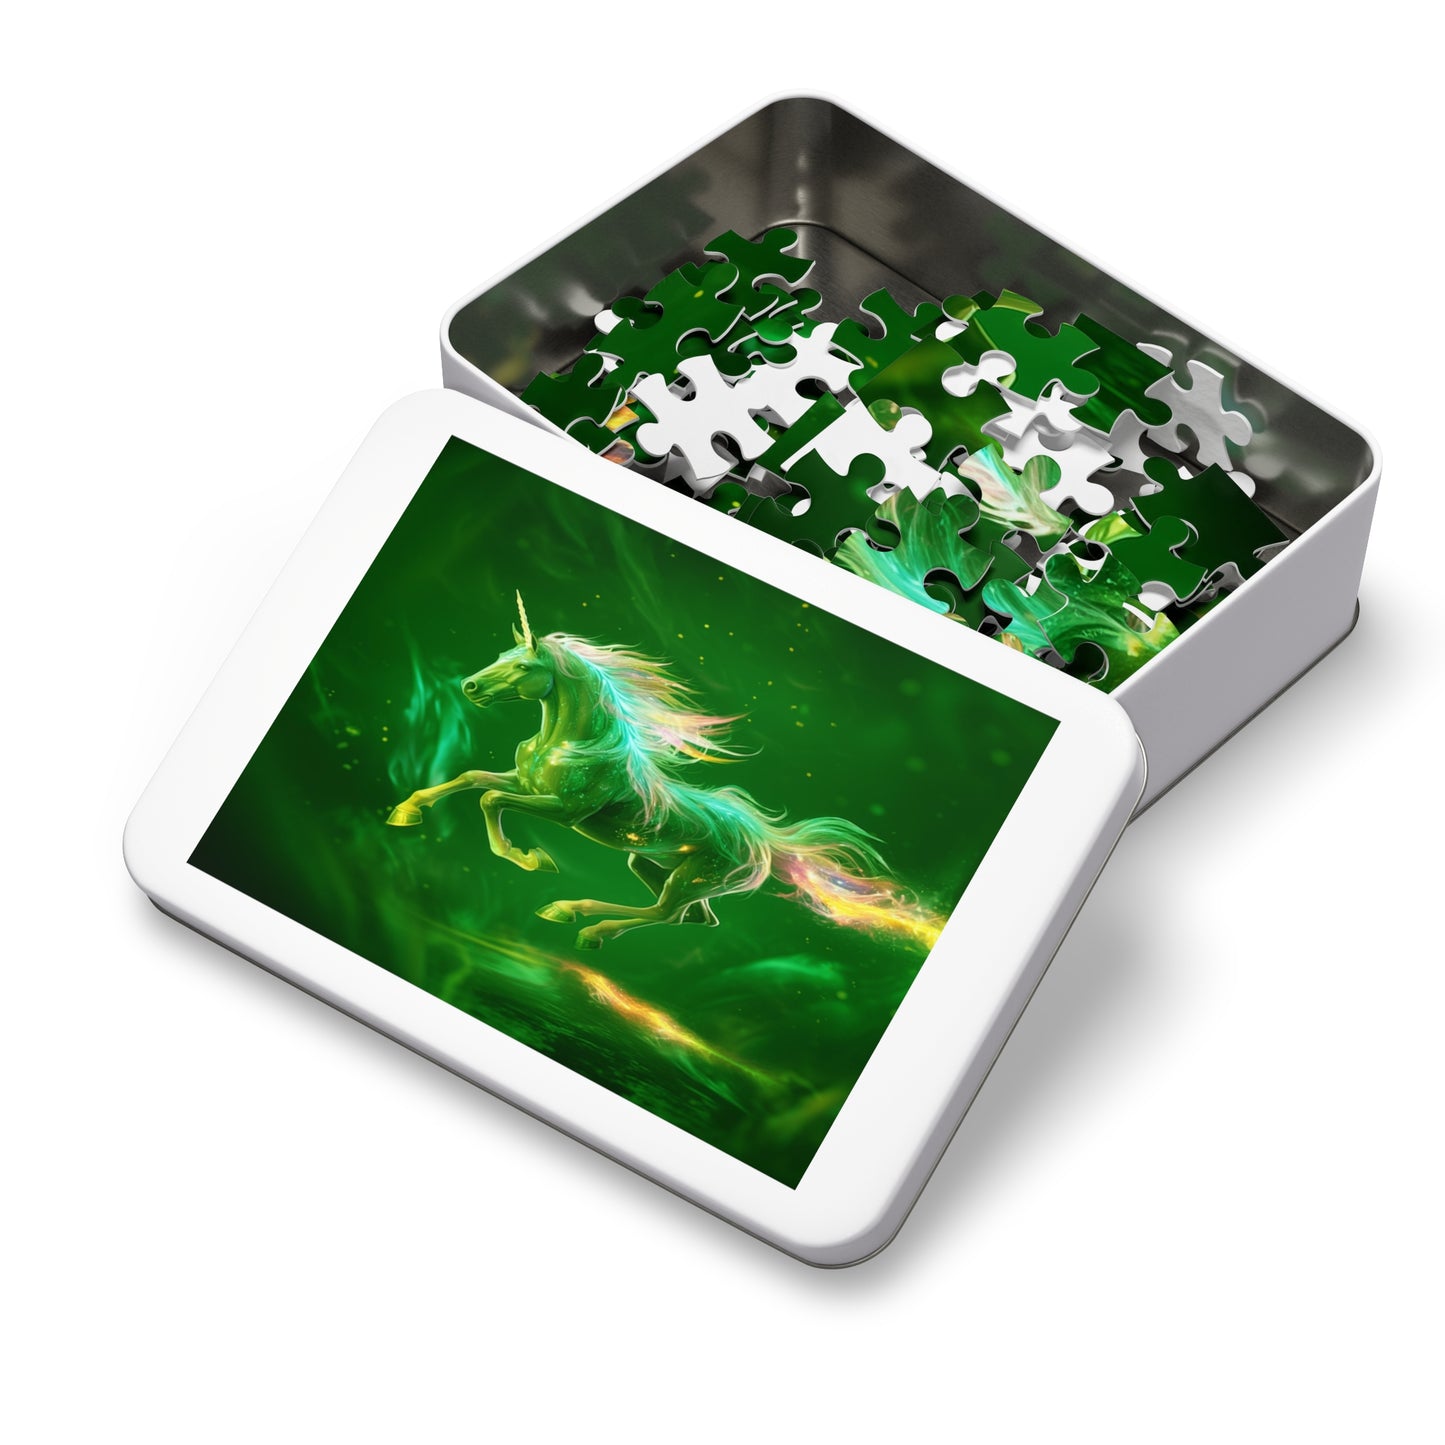 Green Unicorn Jigsaw Puzzle (500,1000-Piece)